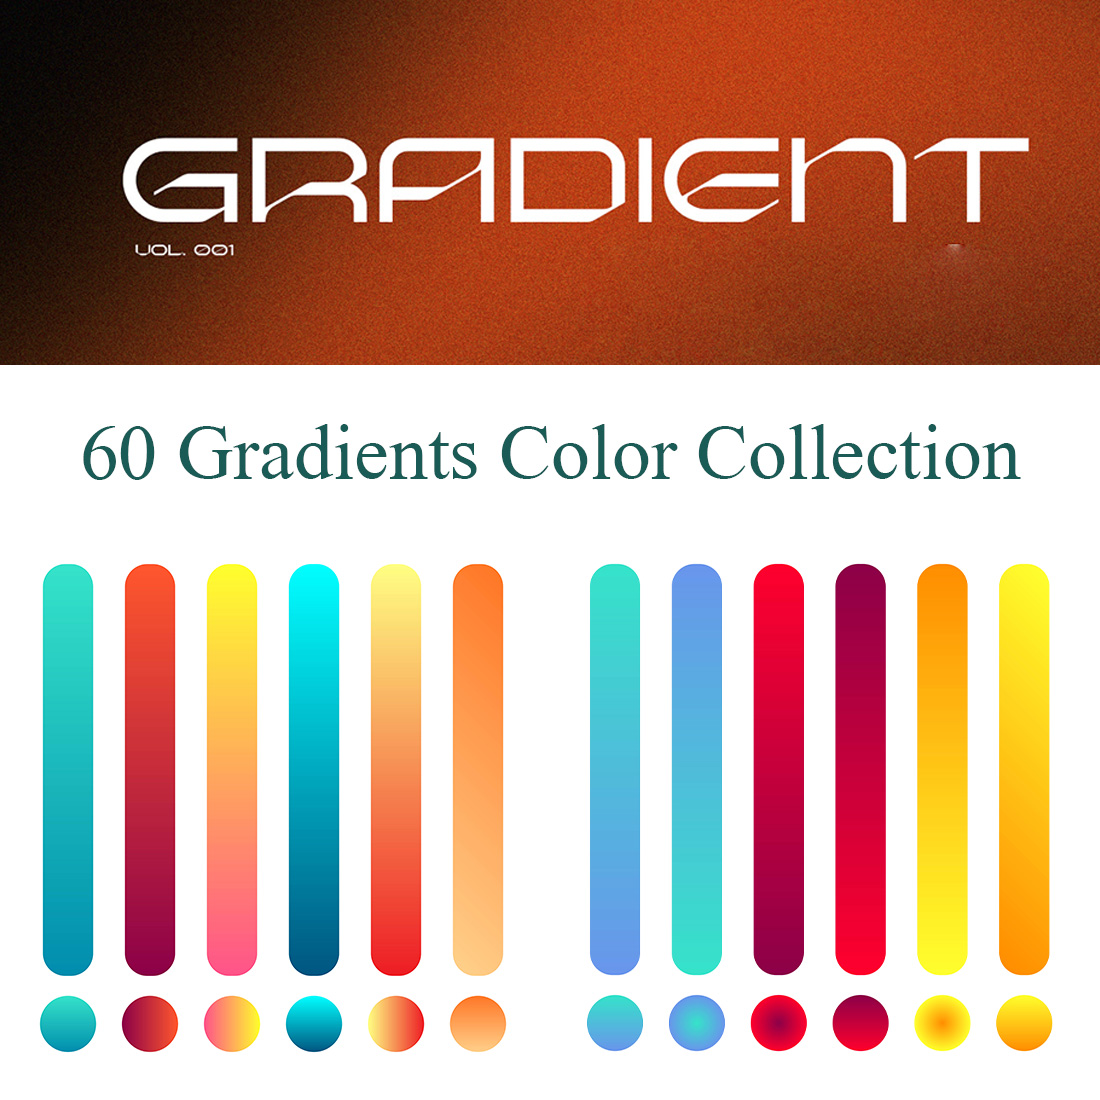 Premium Gradients Colors Pack cover image.